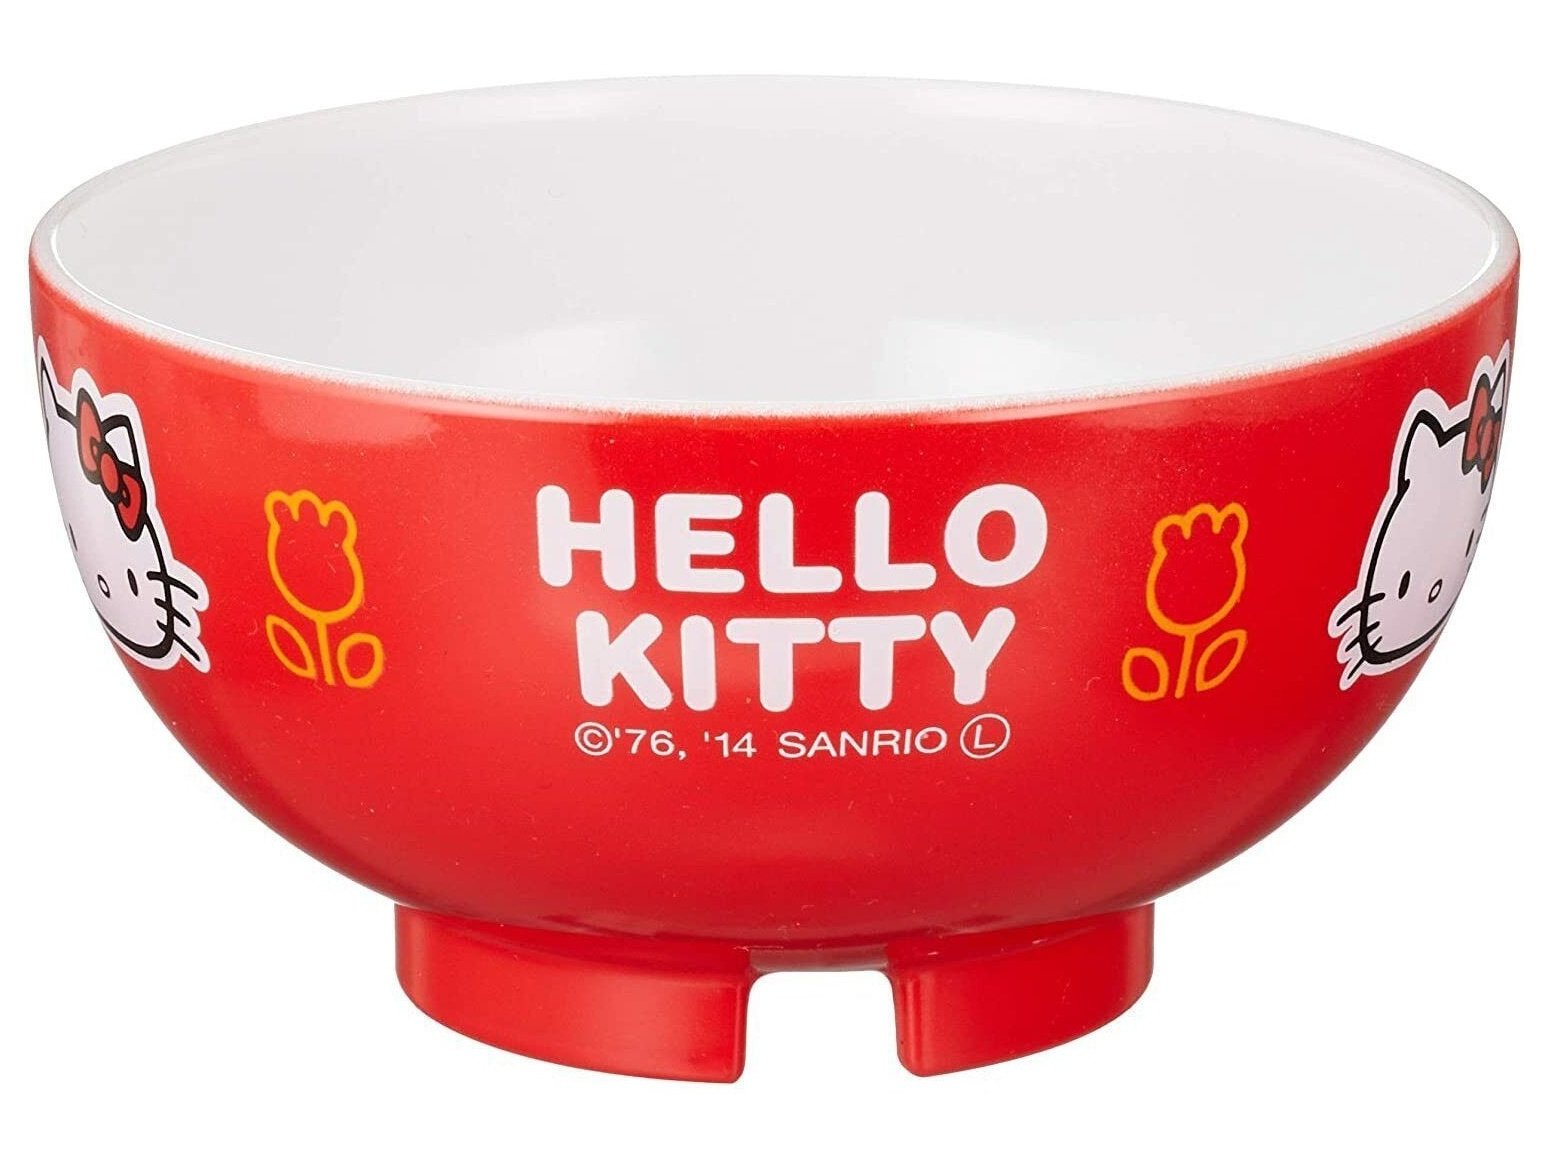 Kanesho Hello Kitty Soup Bowl